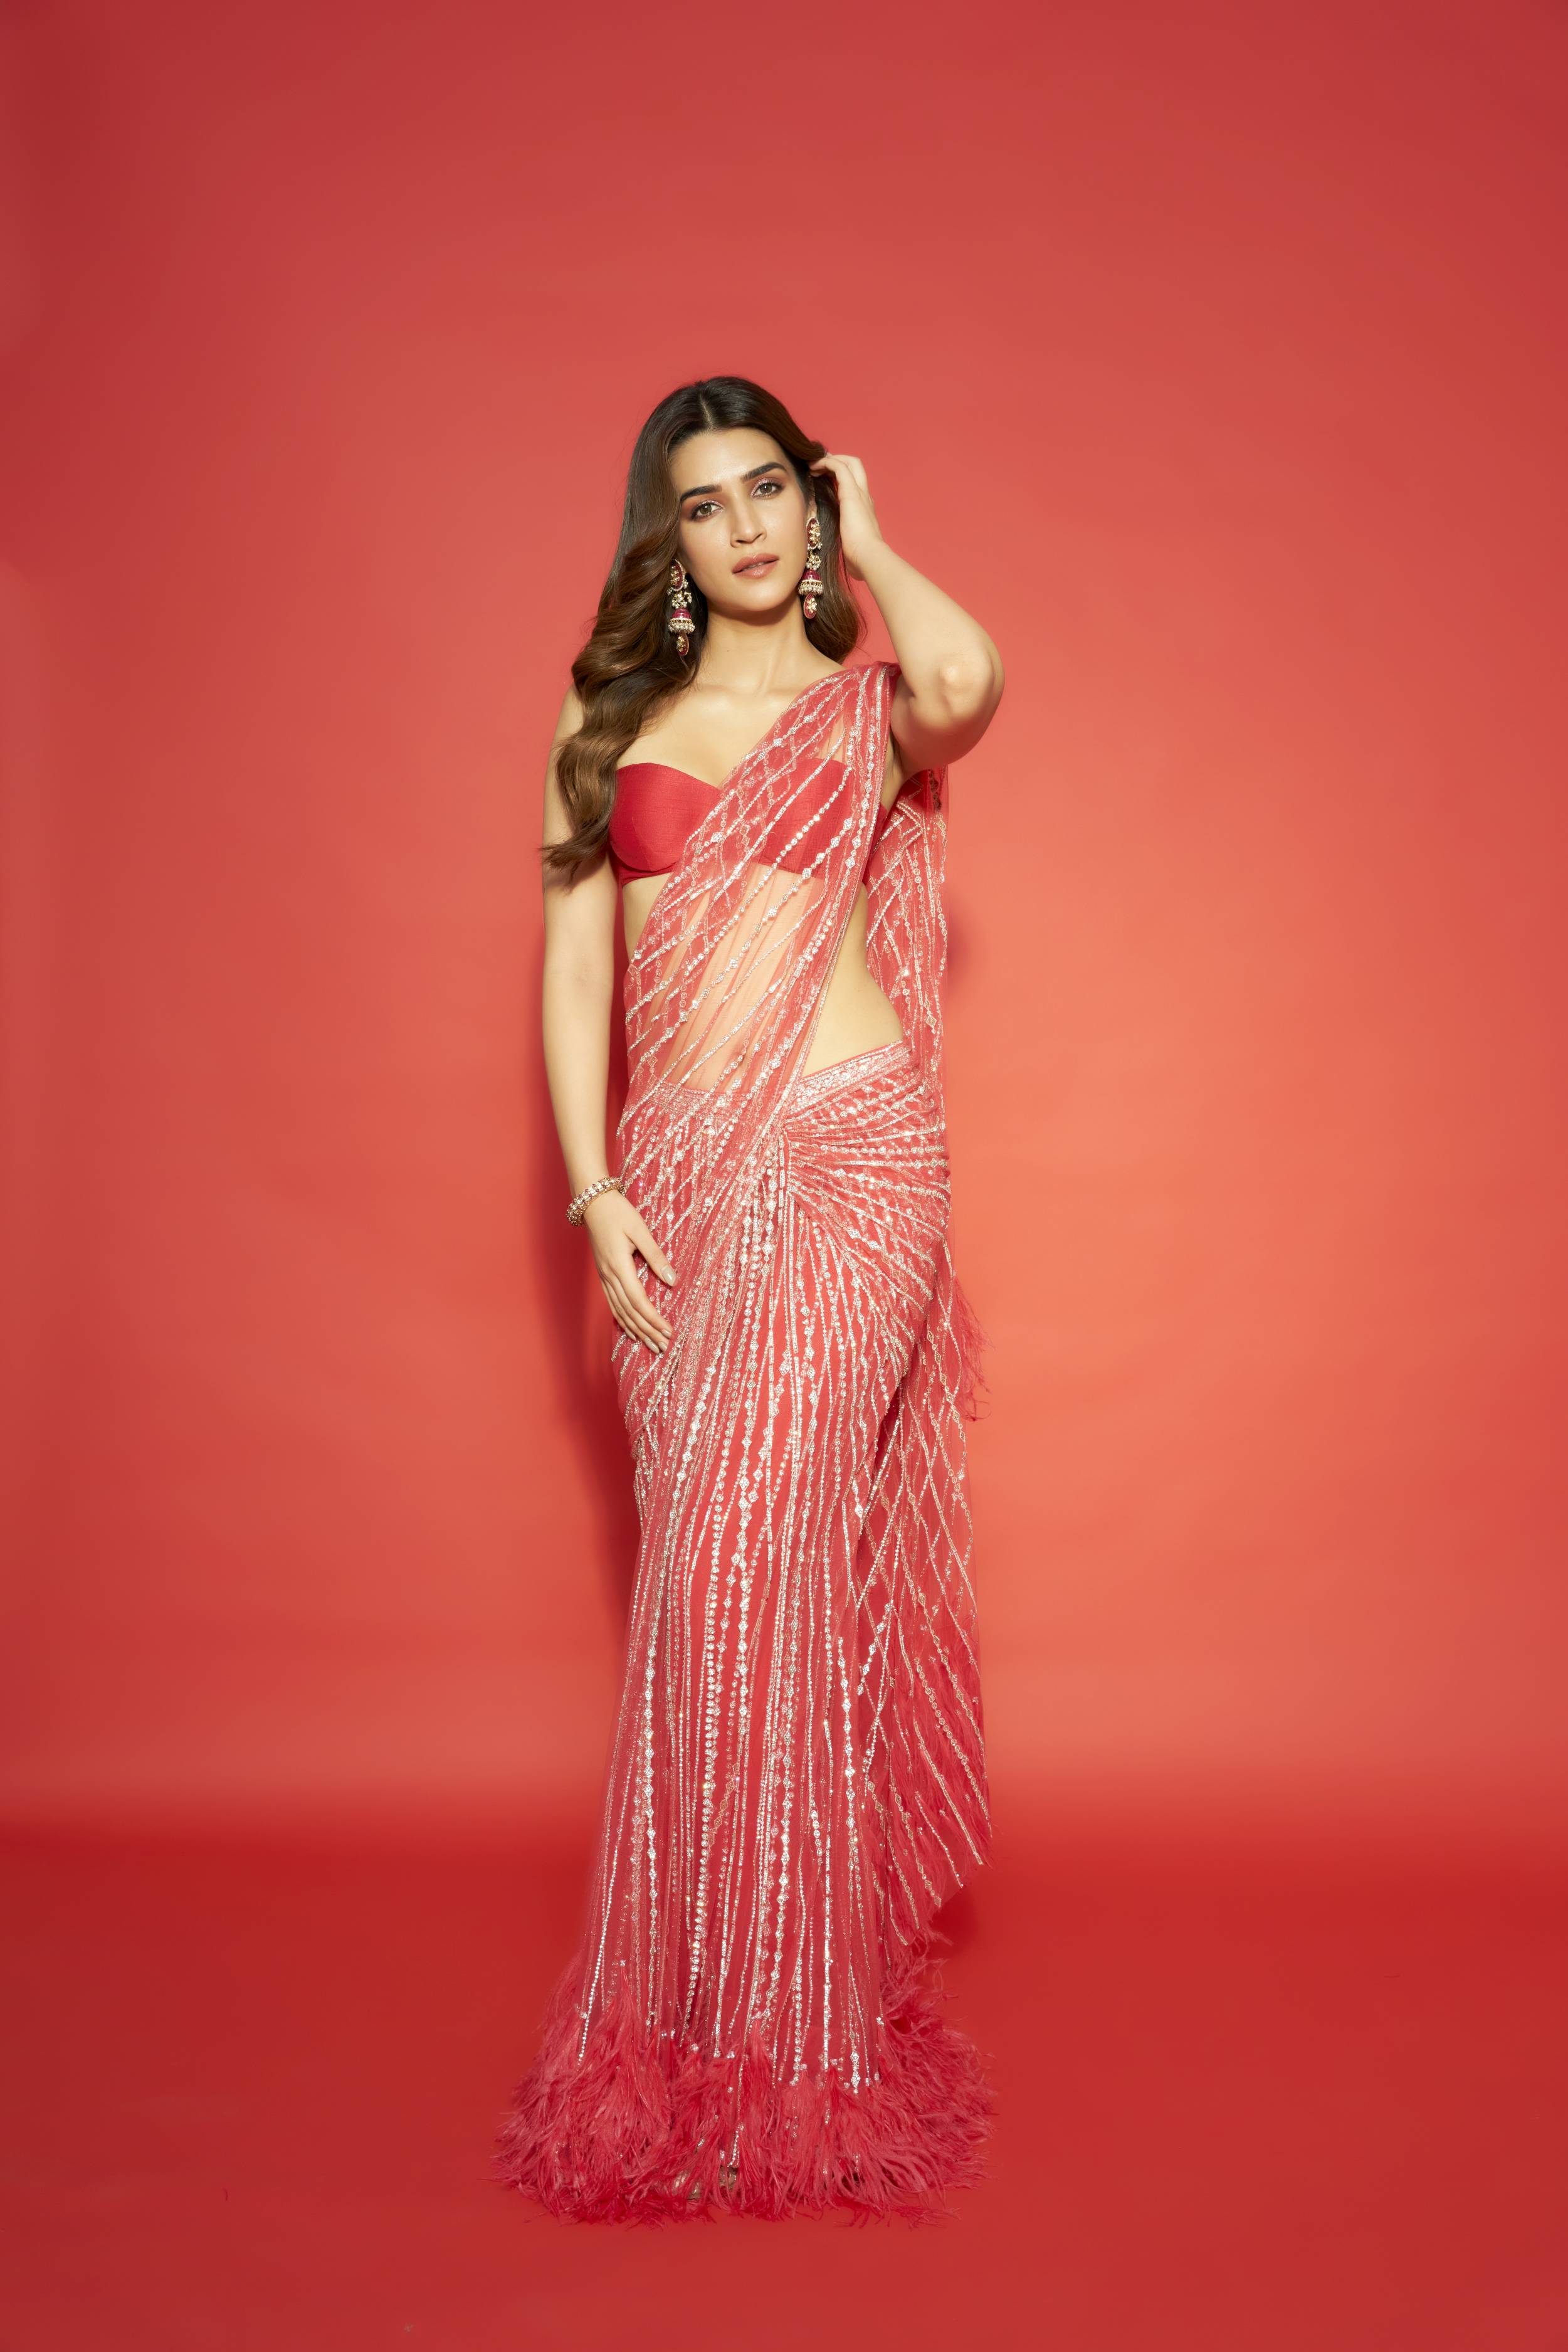 1669205672 708 Bhediya Promotions Times Kriti Sanon gave us iconic sexy saree